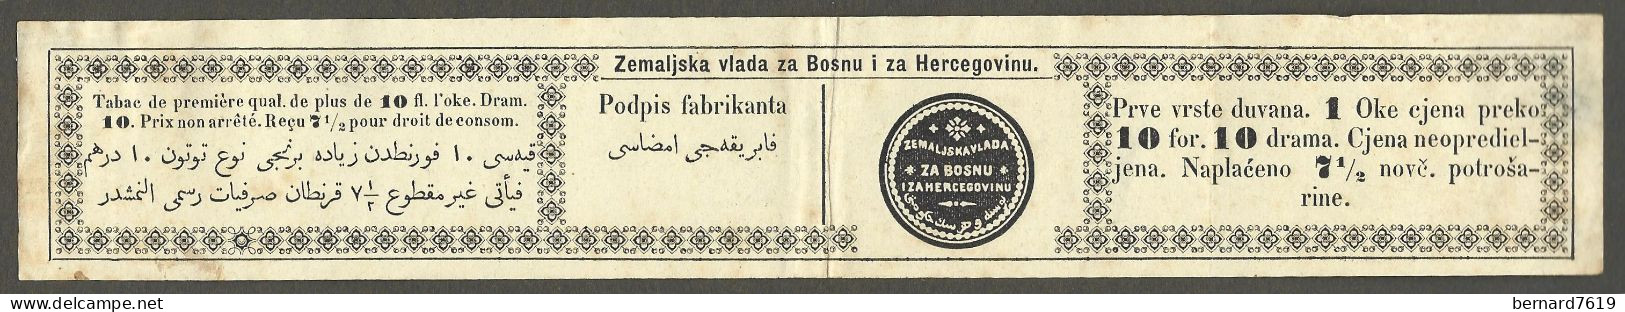 Bande  Tabac  A Priser   1870  - 1900  -zemaljska Vlada  Za Bosnu I Za  Hercegovinu  -10 Drama - Bosnie - Hercegovie - Documents